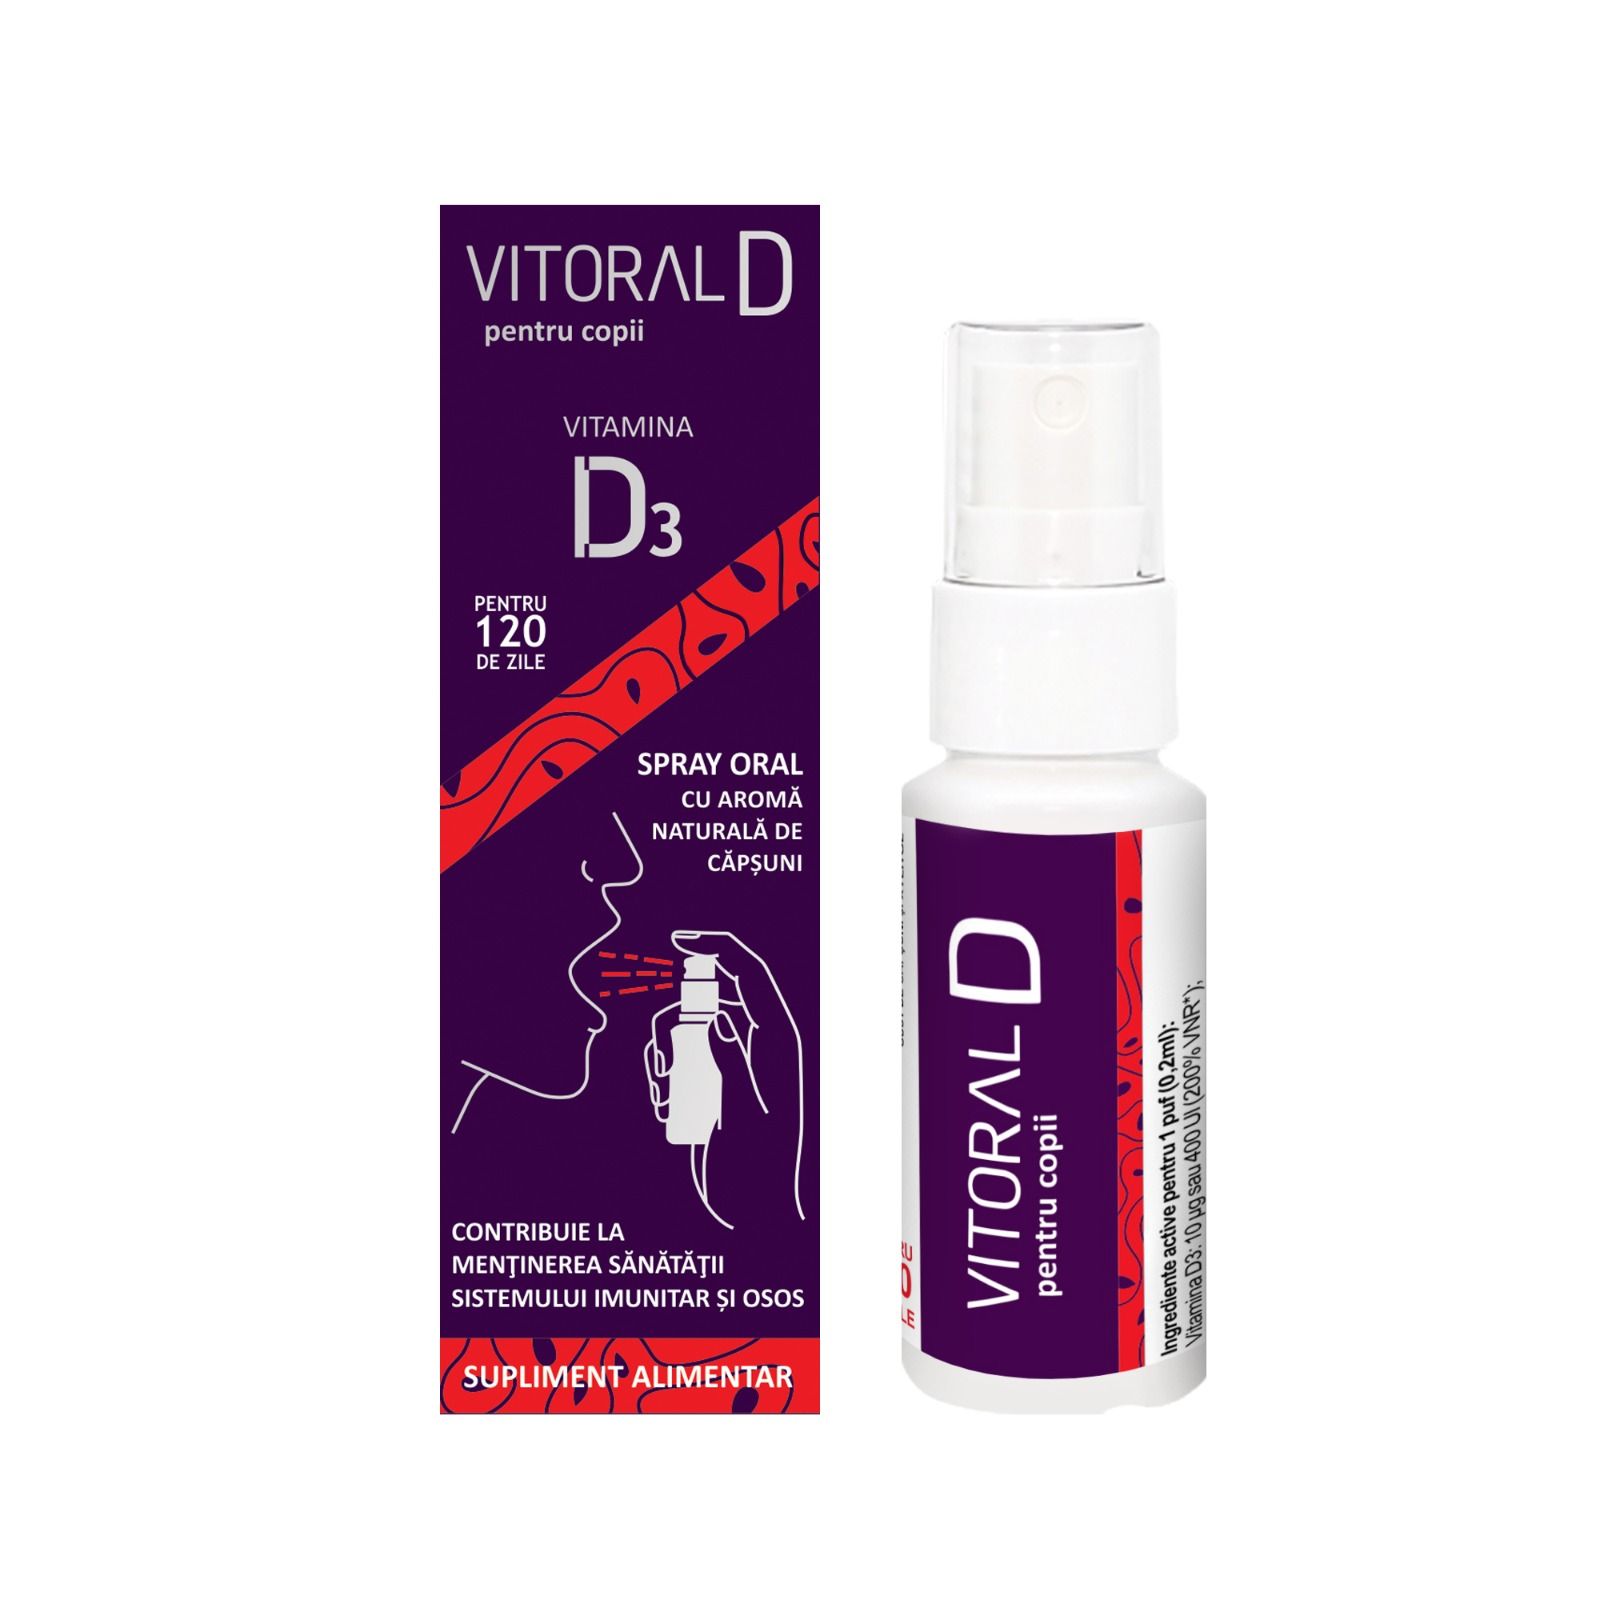 Multivitamine si minerale - Vitoral D spray cu vitamina D3 400ui pentru copii x 25ml, medik-on.ro